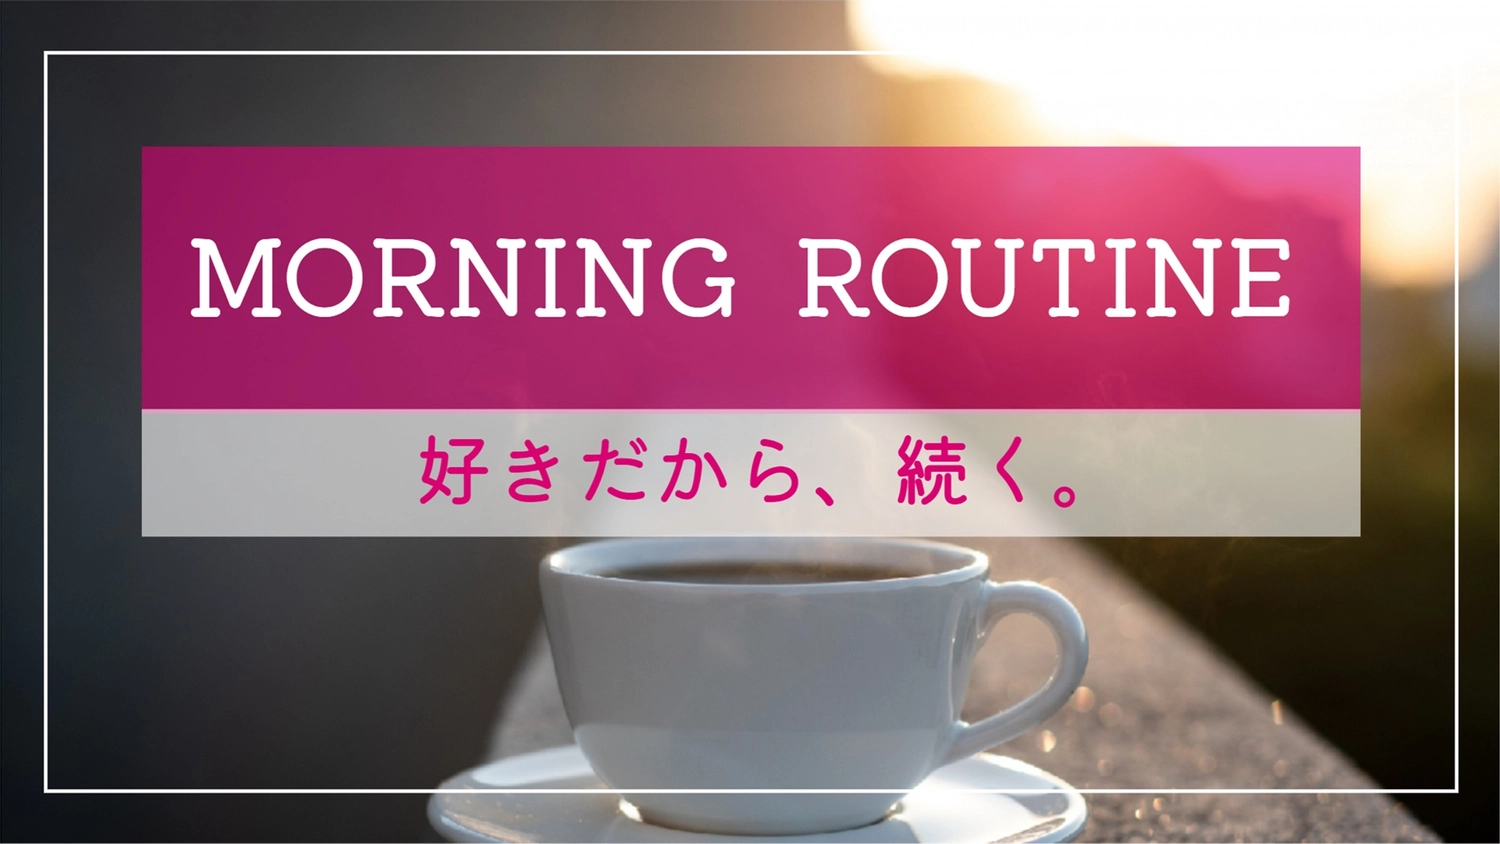 コーヒー写真のモーニングルーティン, thói quen buổi sáng, không có người, tiêu đề, Blog Banner mẫu